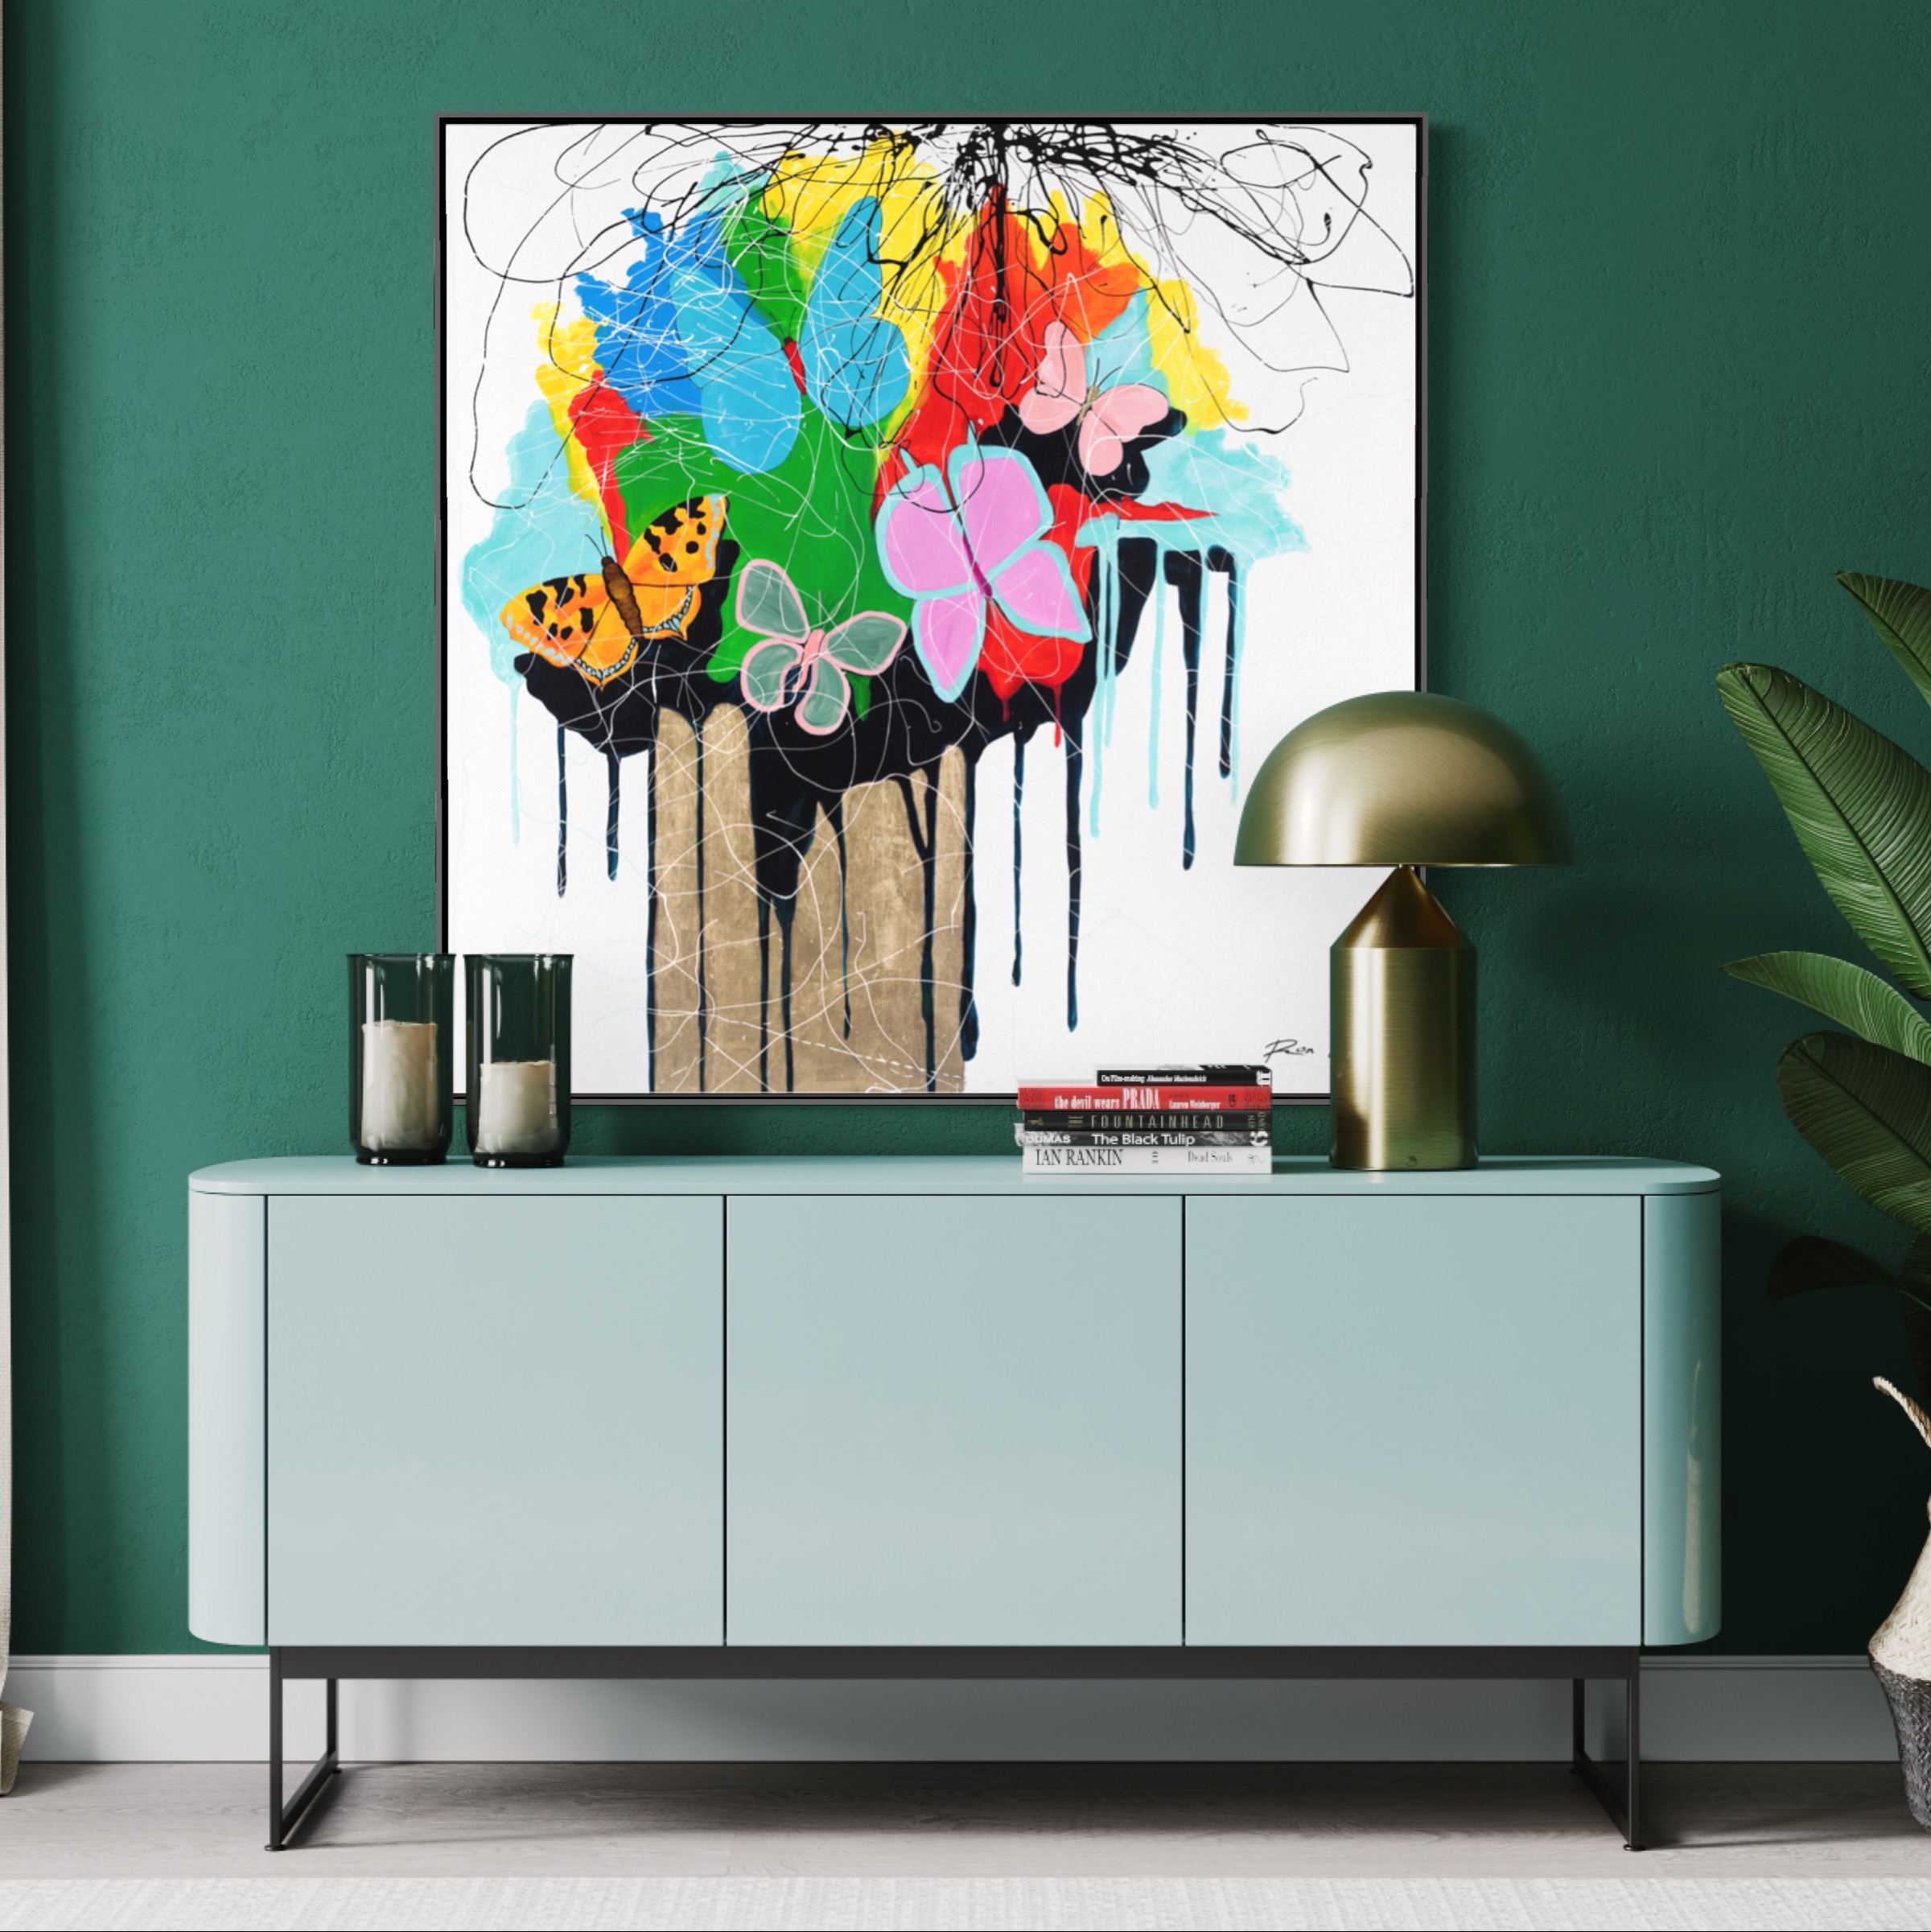 butterflies art painting on canvas in livingroom decor